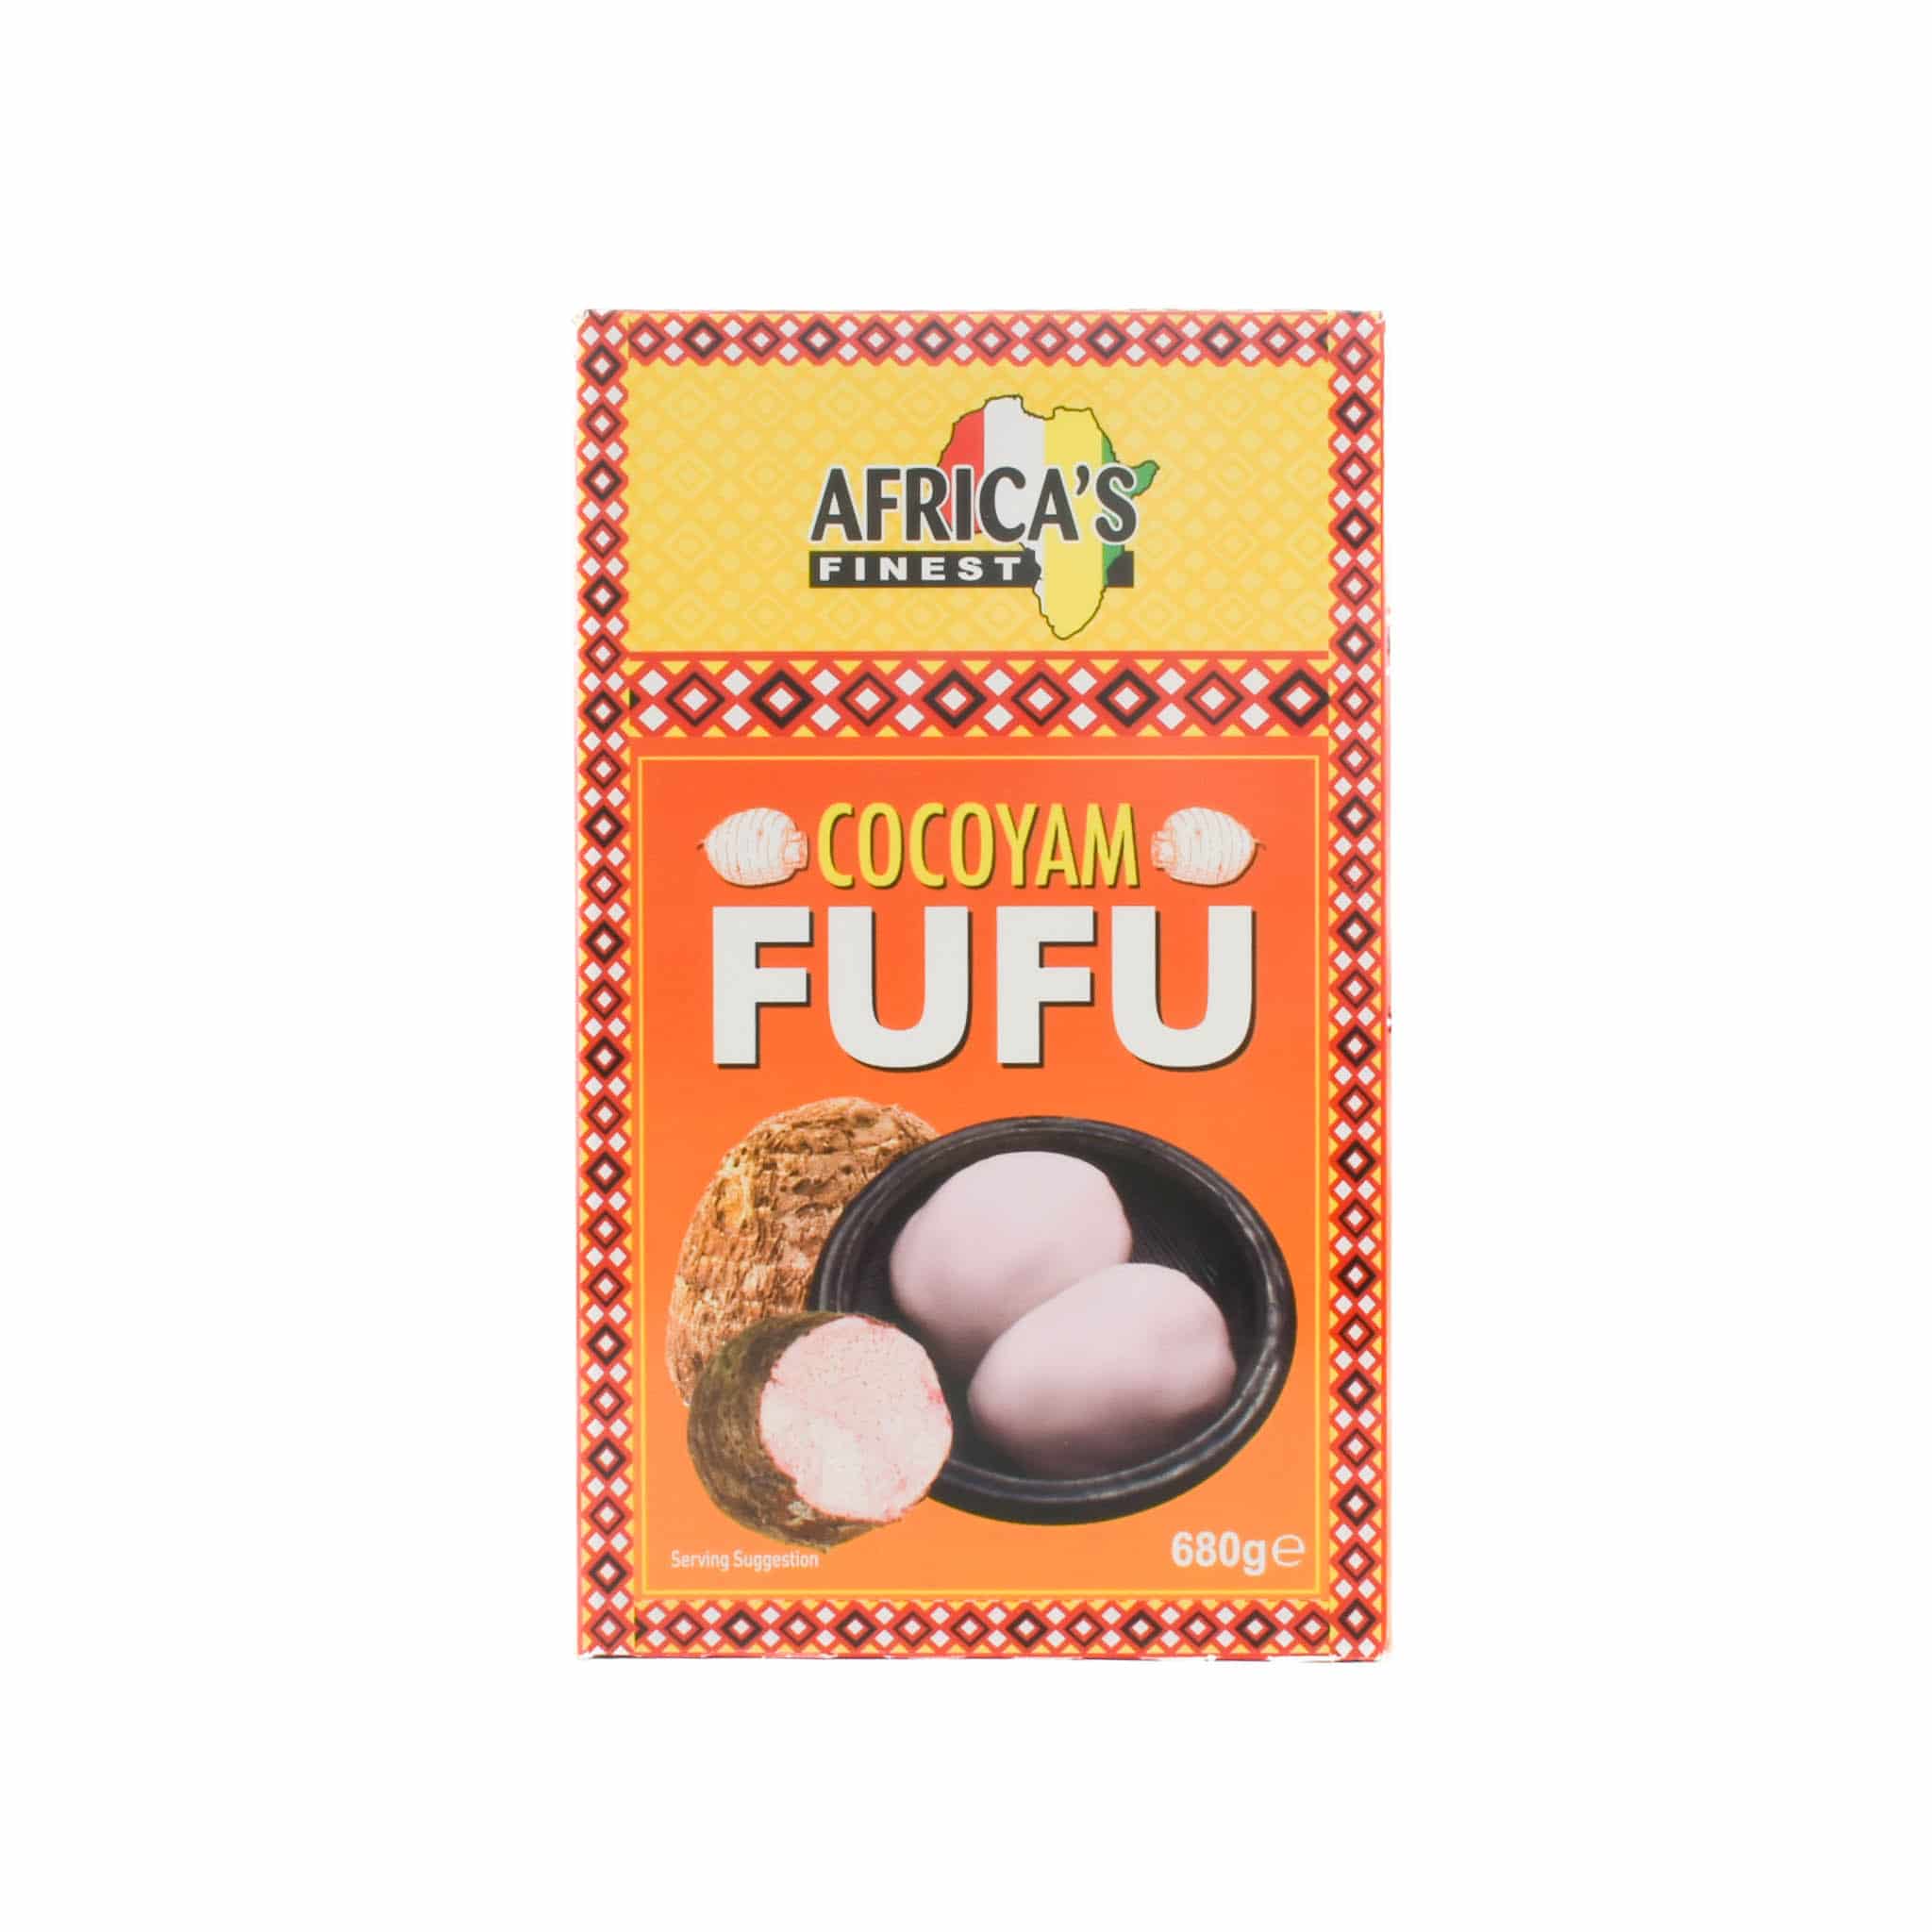 Africa's Finest Cocoyam Fufu, 680g